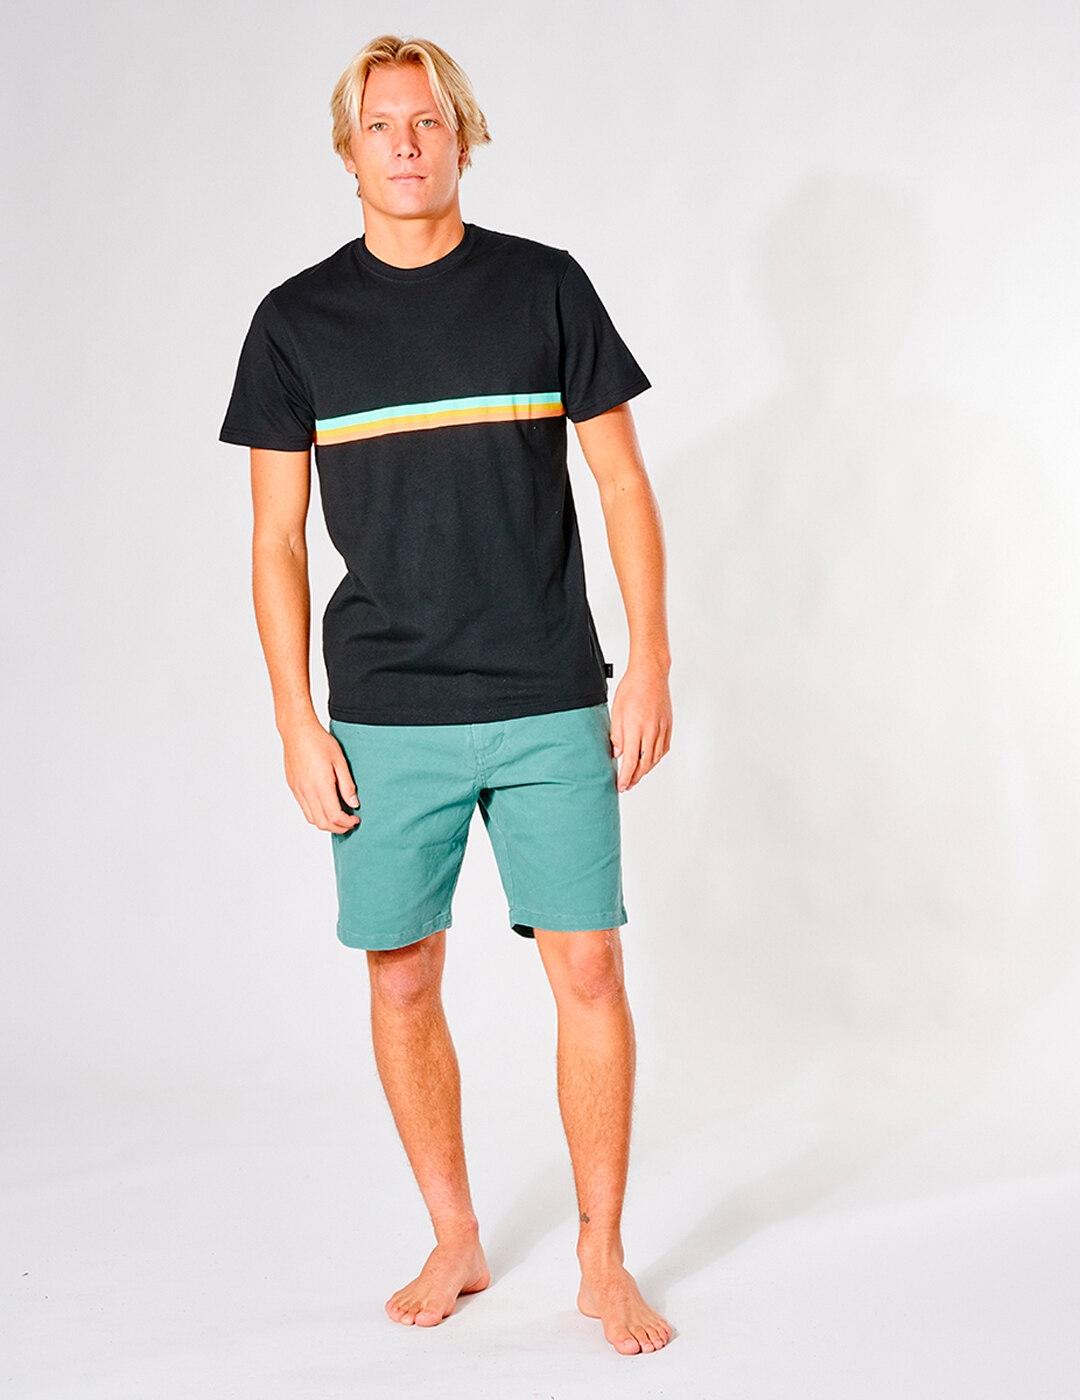 Camiseta SURF REVIVAL STRIP - Negro